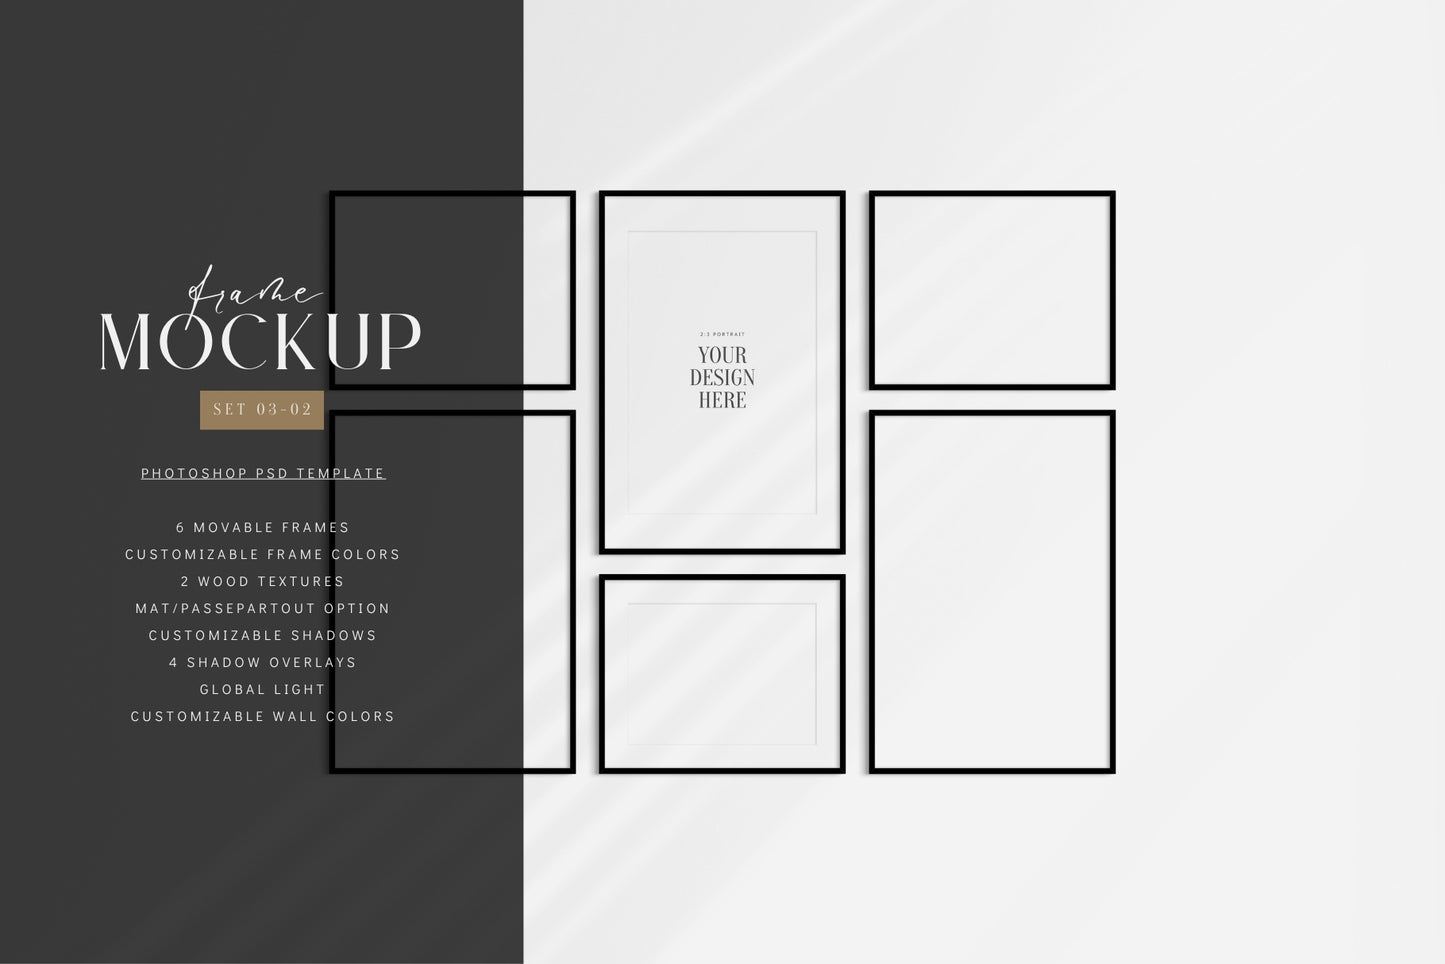 Gallery Wall Mockup | Frame Mockup Set of 6 Frames | Wall Art Mockup | PSD Template